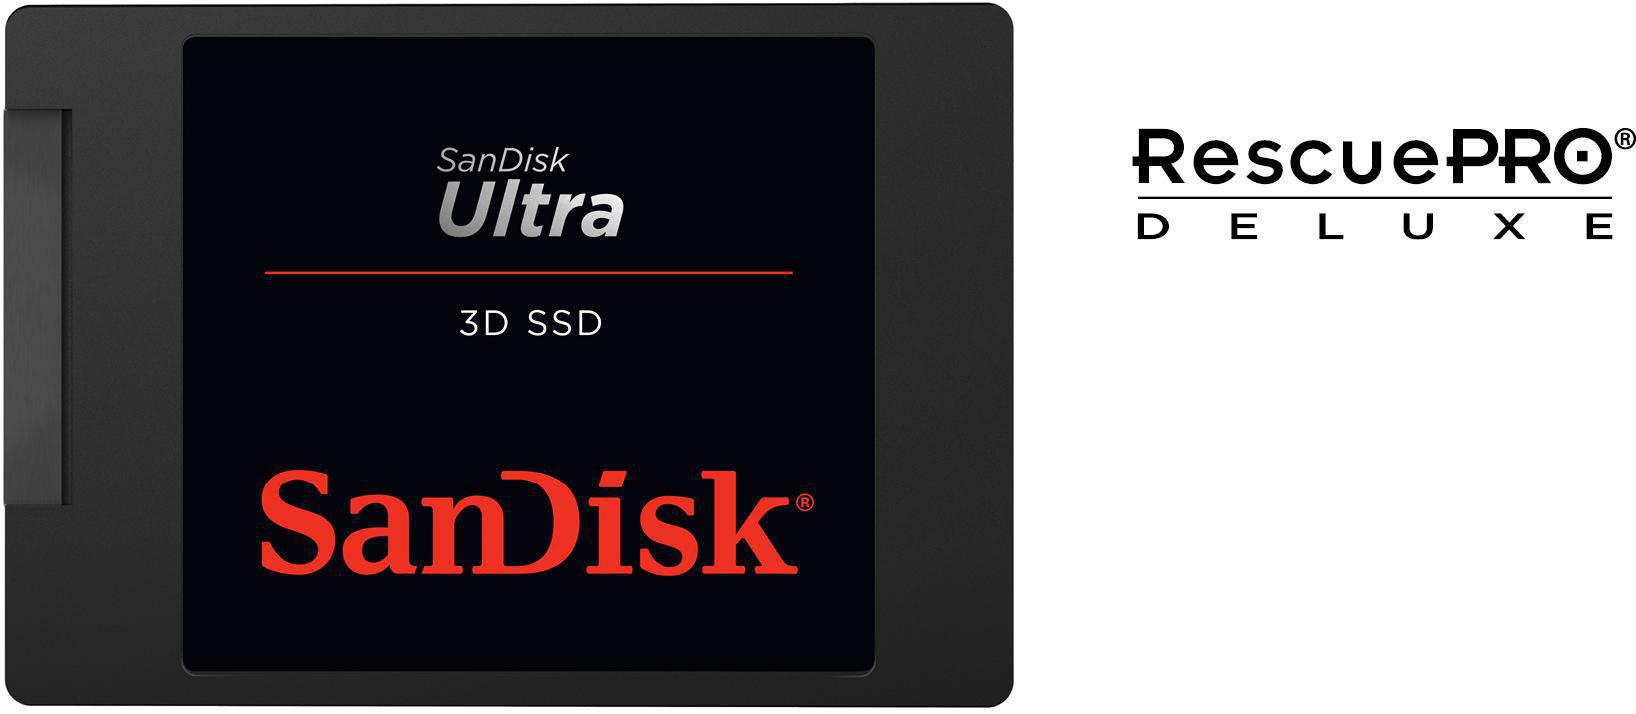 intern Gbps, SSD 3D Zoll, 6 TB 2,5 Speicher, 1 Ultra® SATA SANDISK